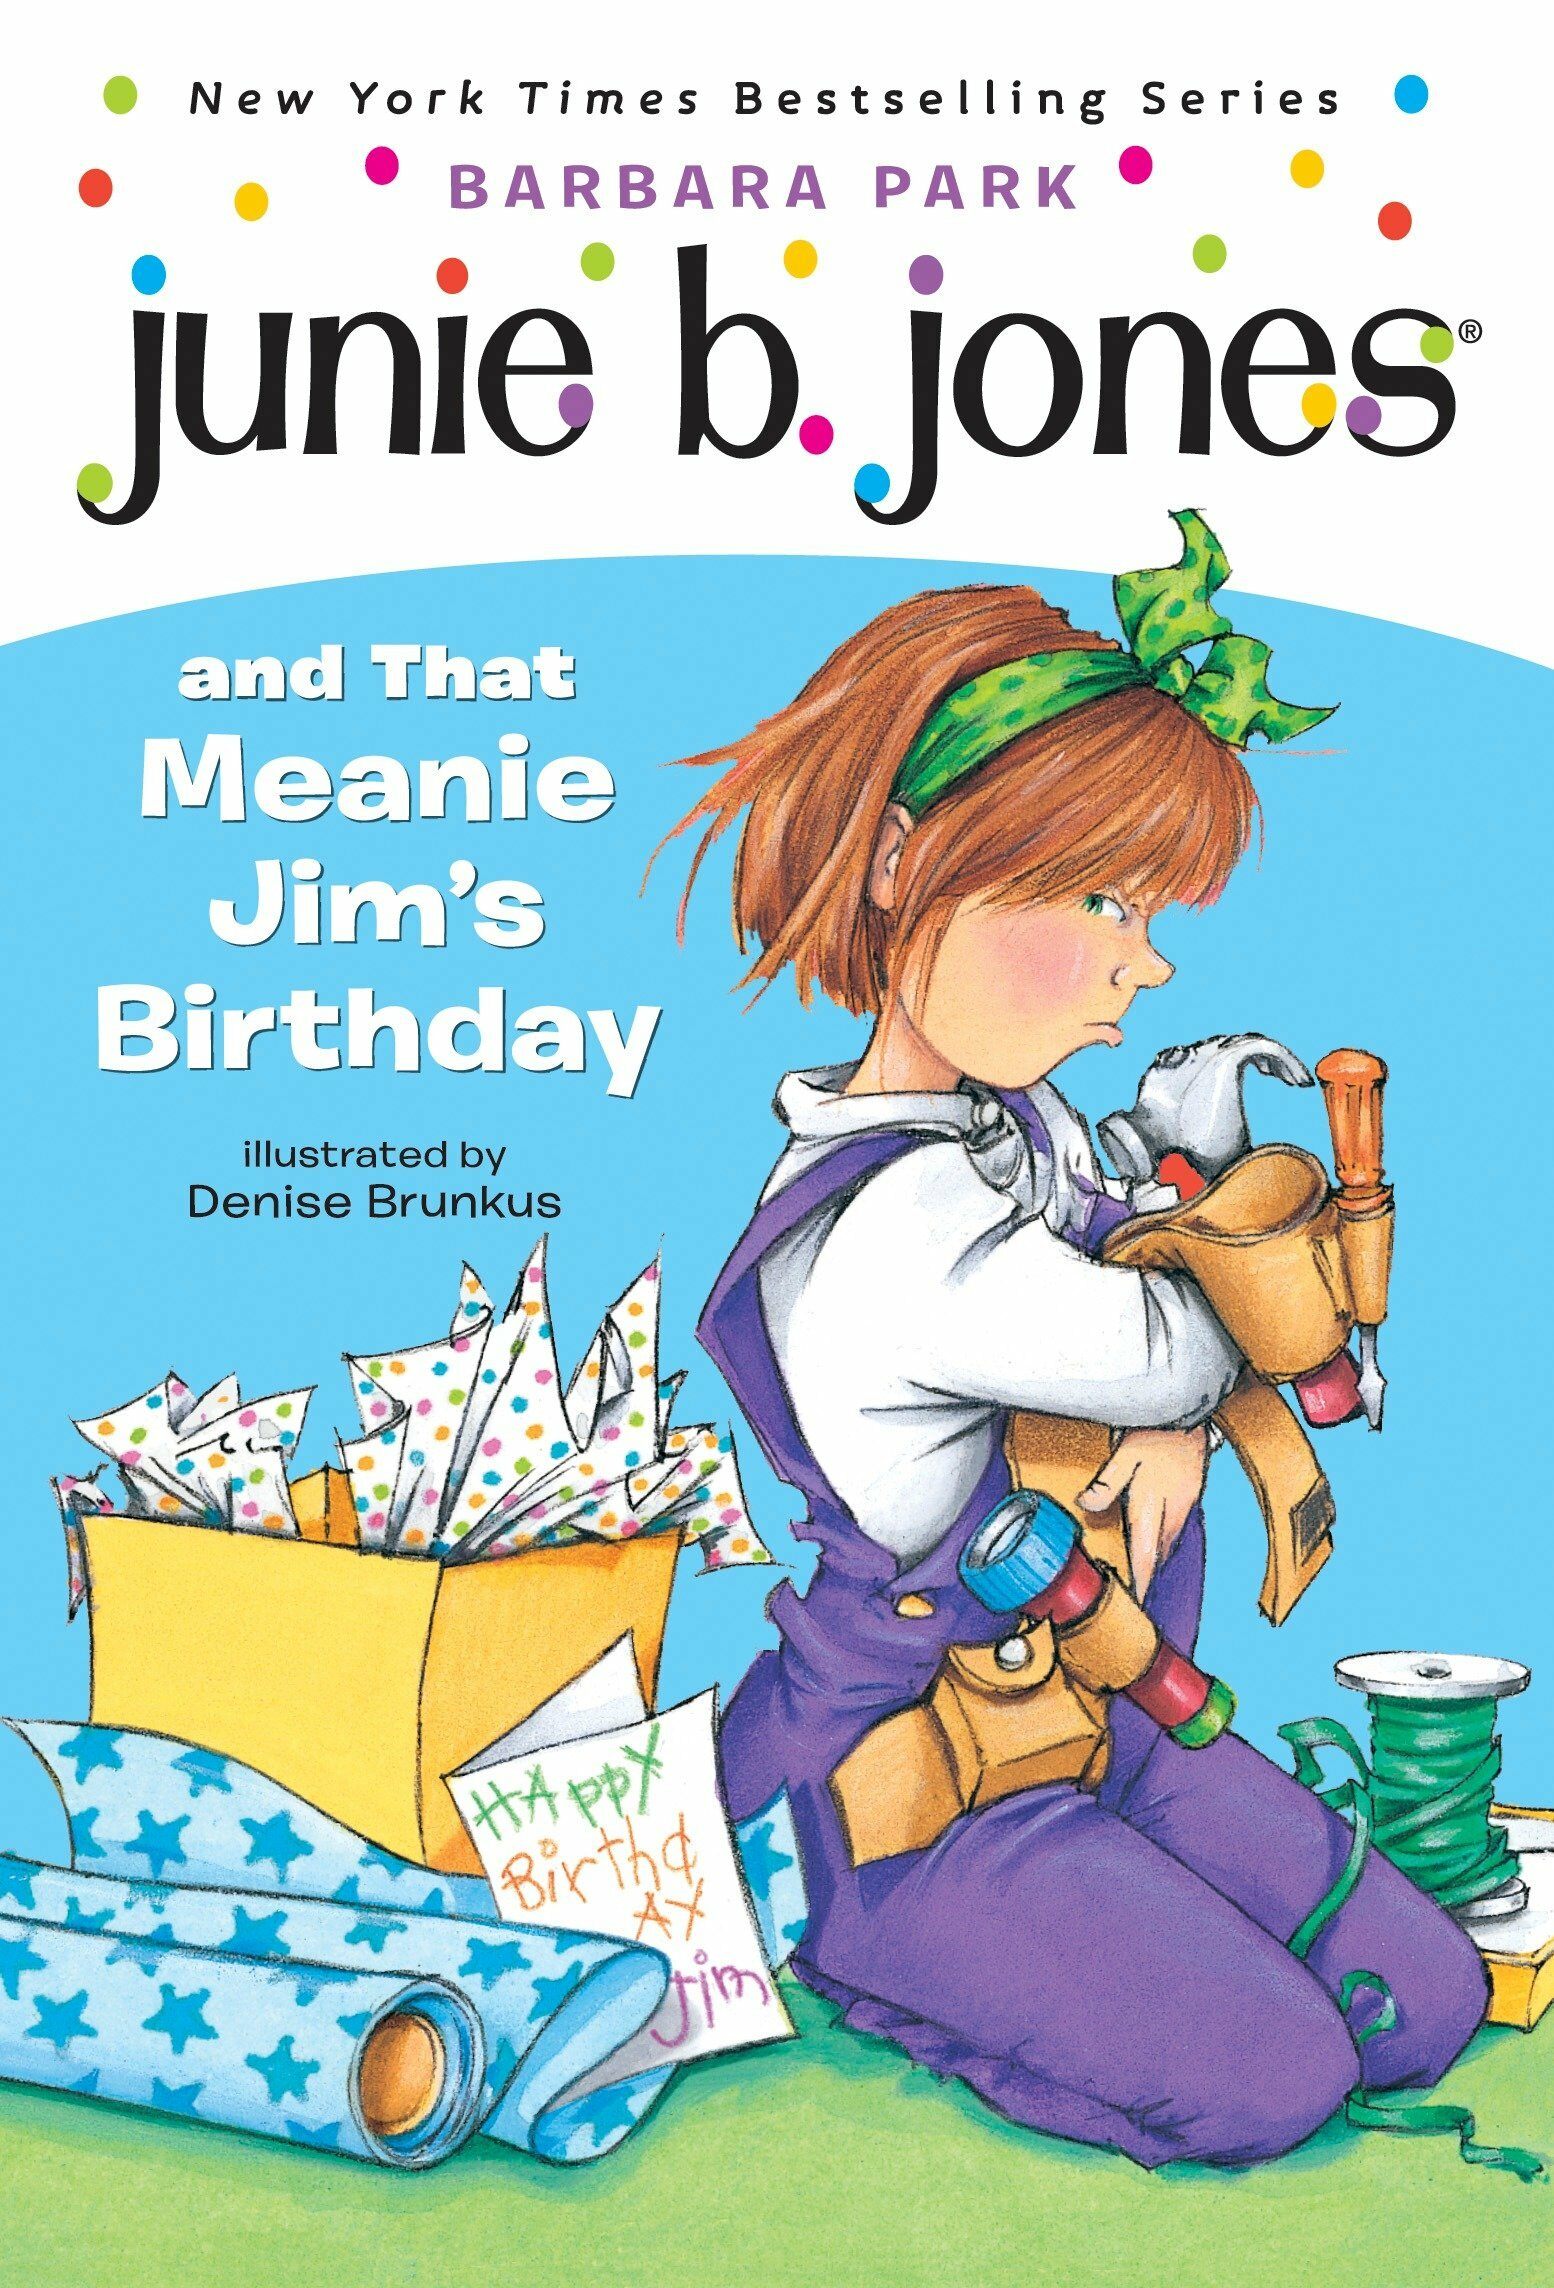 Junie B. Jones #6: Junie B. Jones and That Meanie Jims Birthday (Paperback)